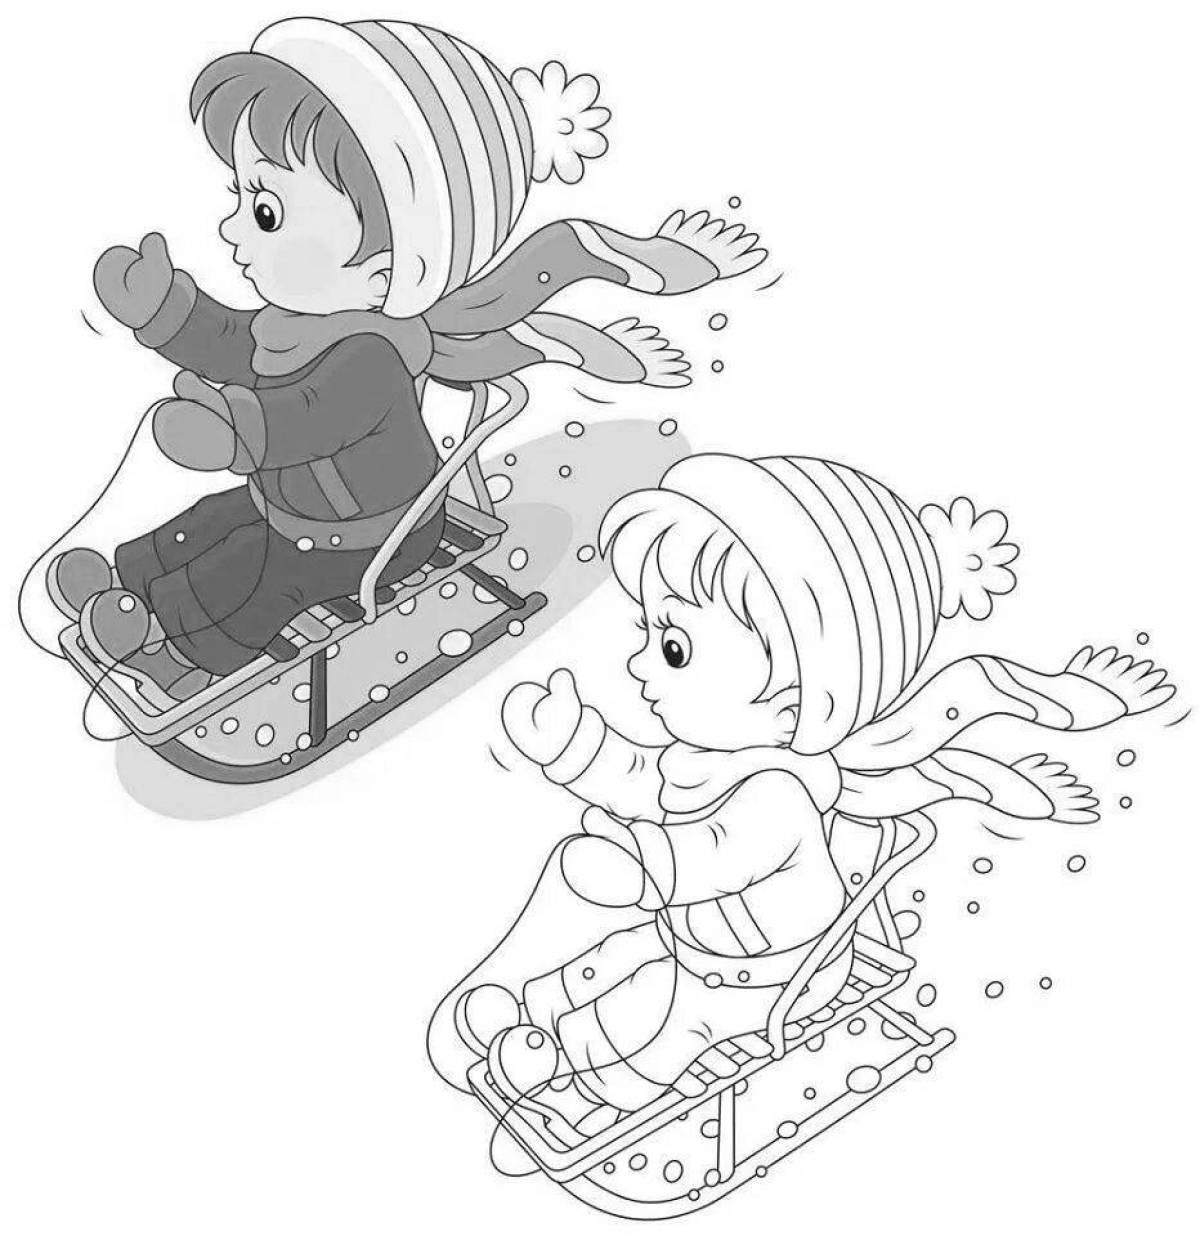 Active children sledding down the hill